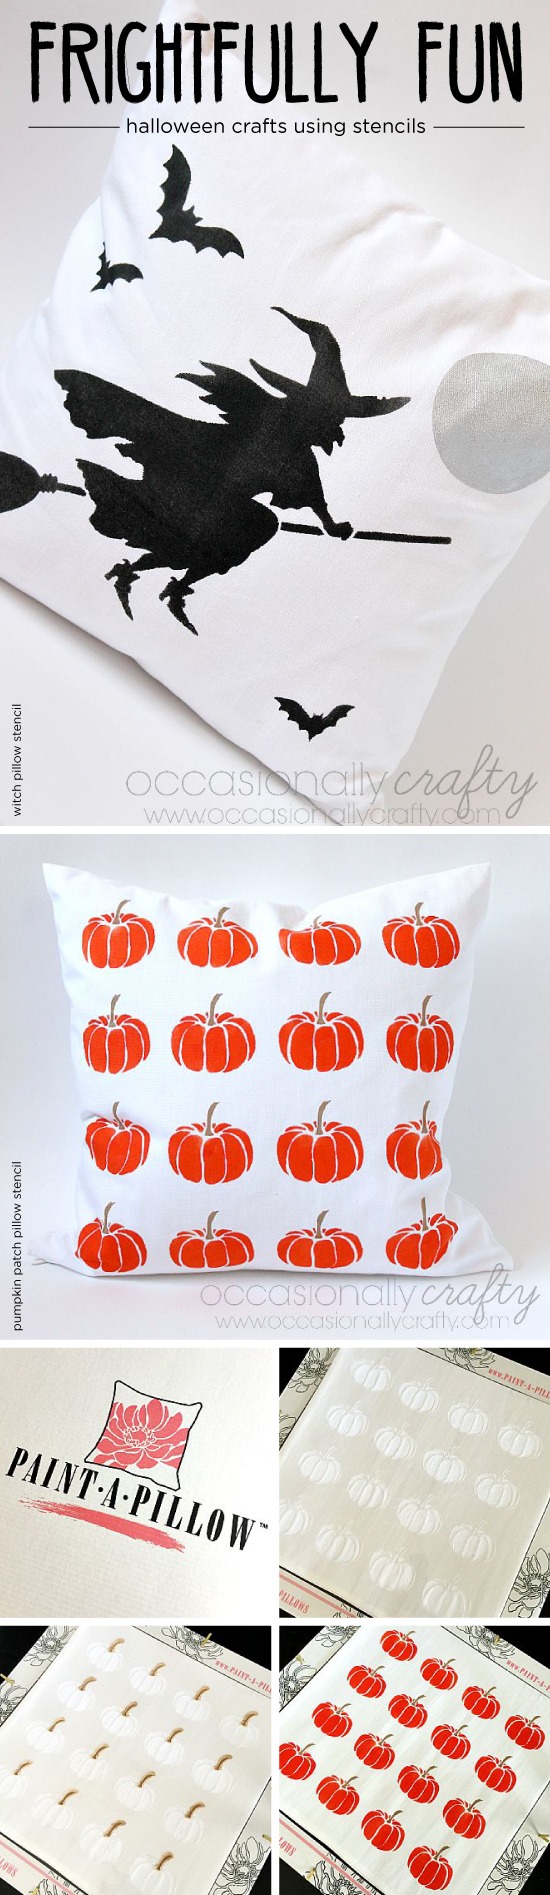 A DIY stenciled accent pillow using the Pumpkin Patch Stencil from Cutting Edge Stencils. http://www.cuttingedgestencils.com/pumpkin-stencil-pattern-halloween-home-decor-accent-pillows.html